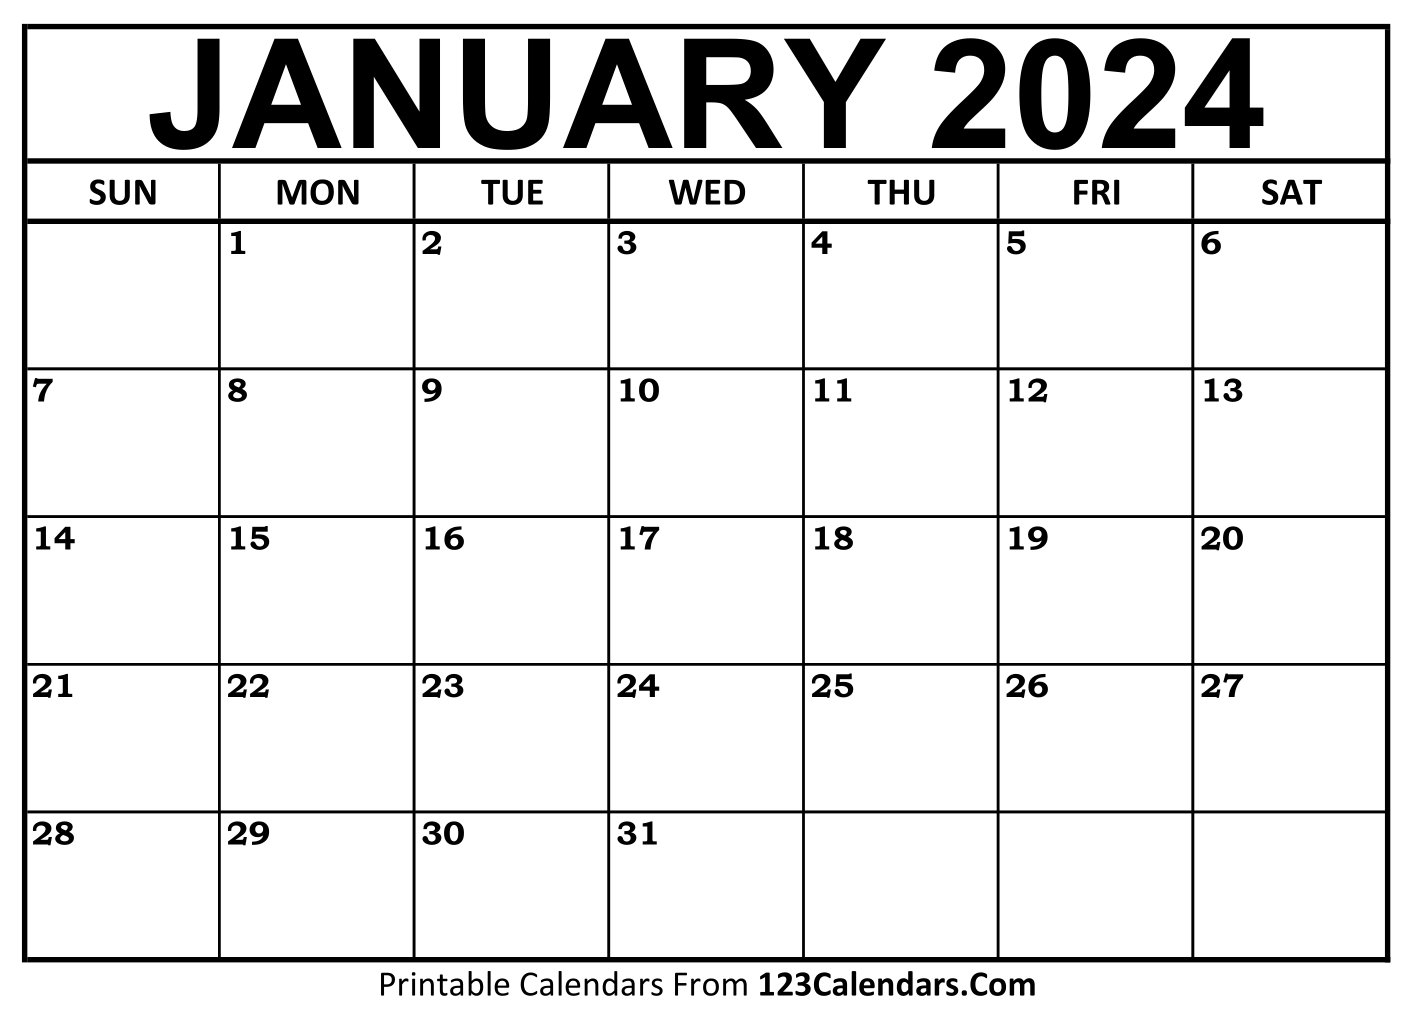 Printable January 2024 Calendar Templates - 123Calendars for Free Printable Calendar Templates January 2024